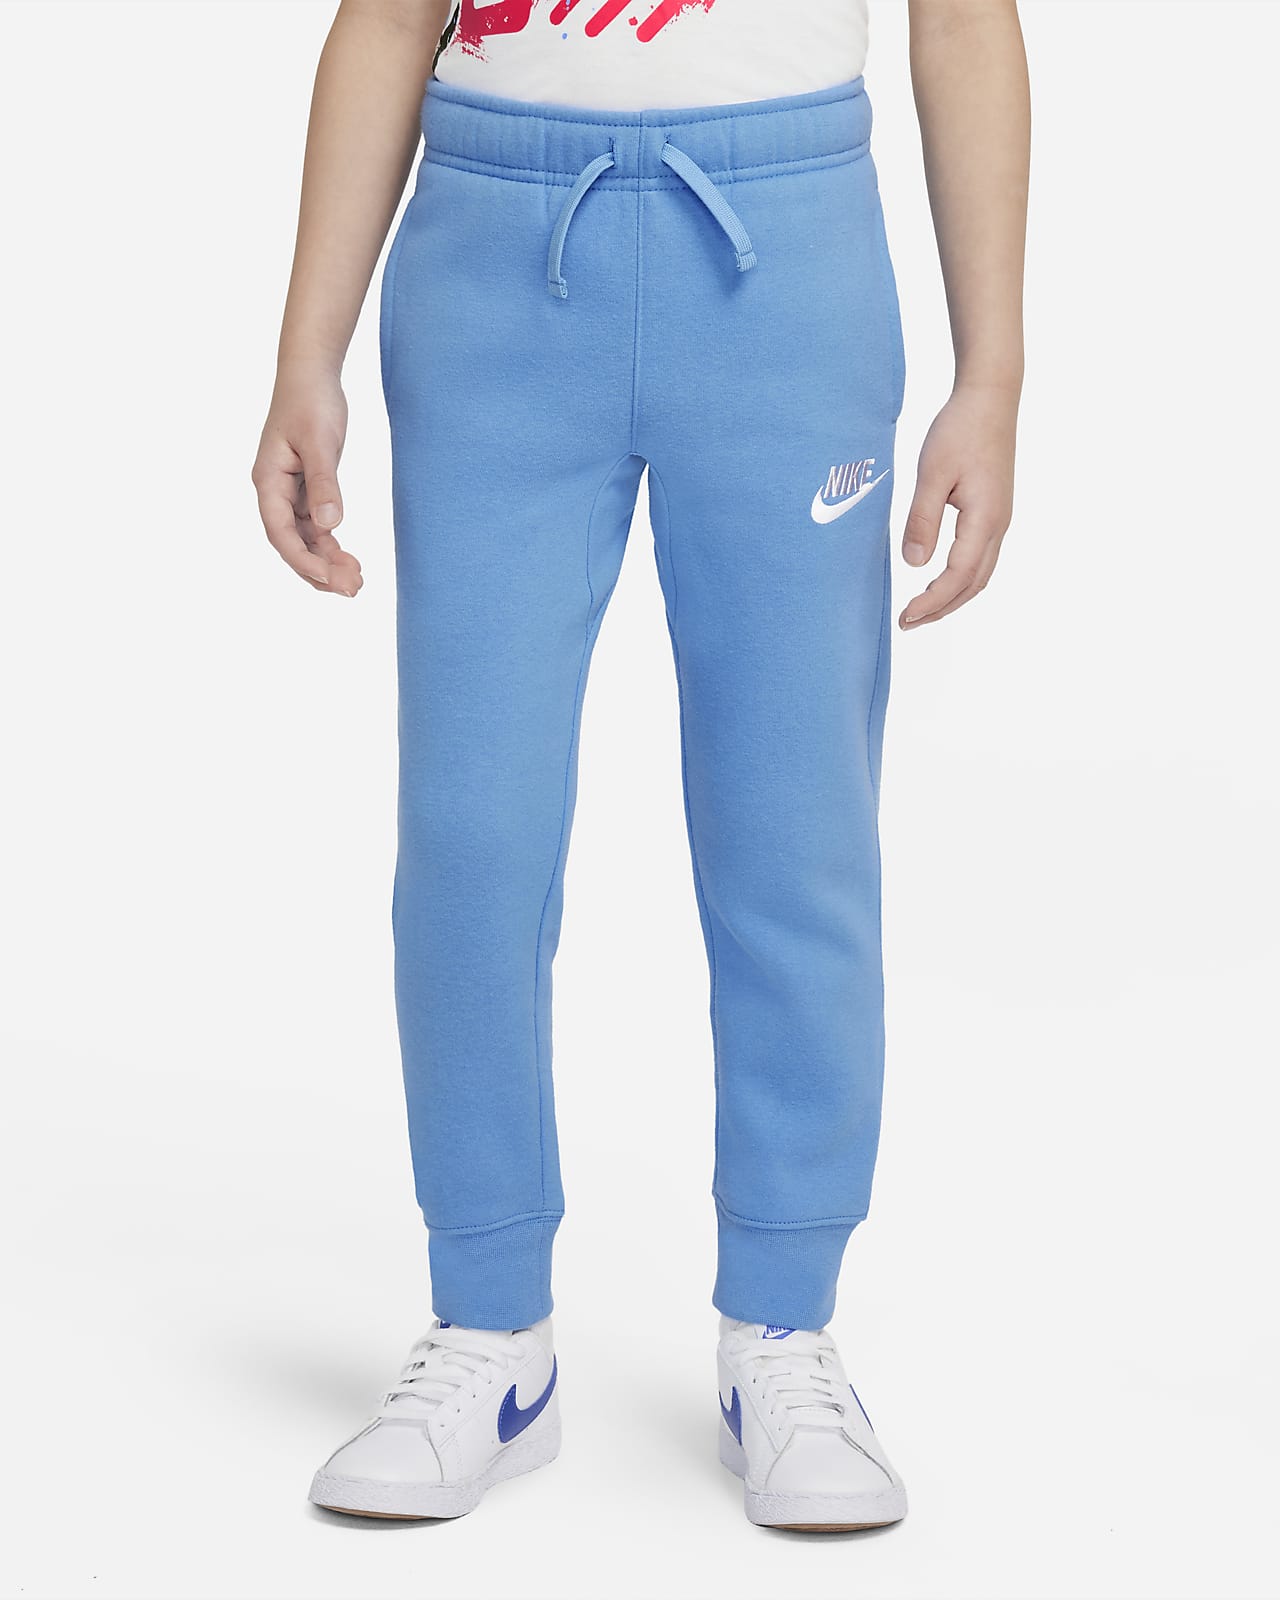 Nike Boys' Club Sweatpants, Kids', Jogger, Cotton, Athletic